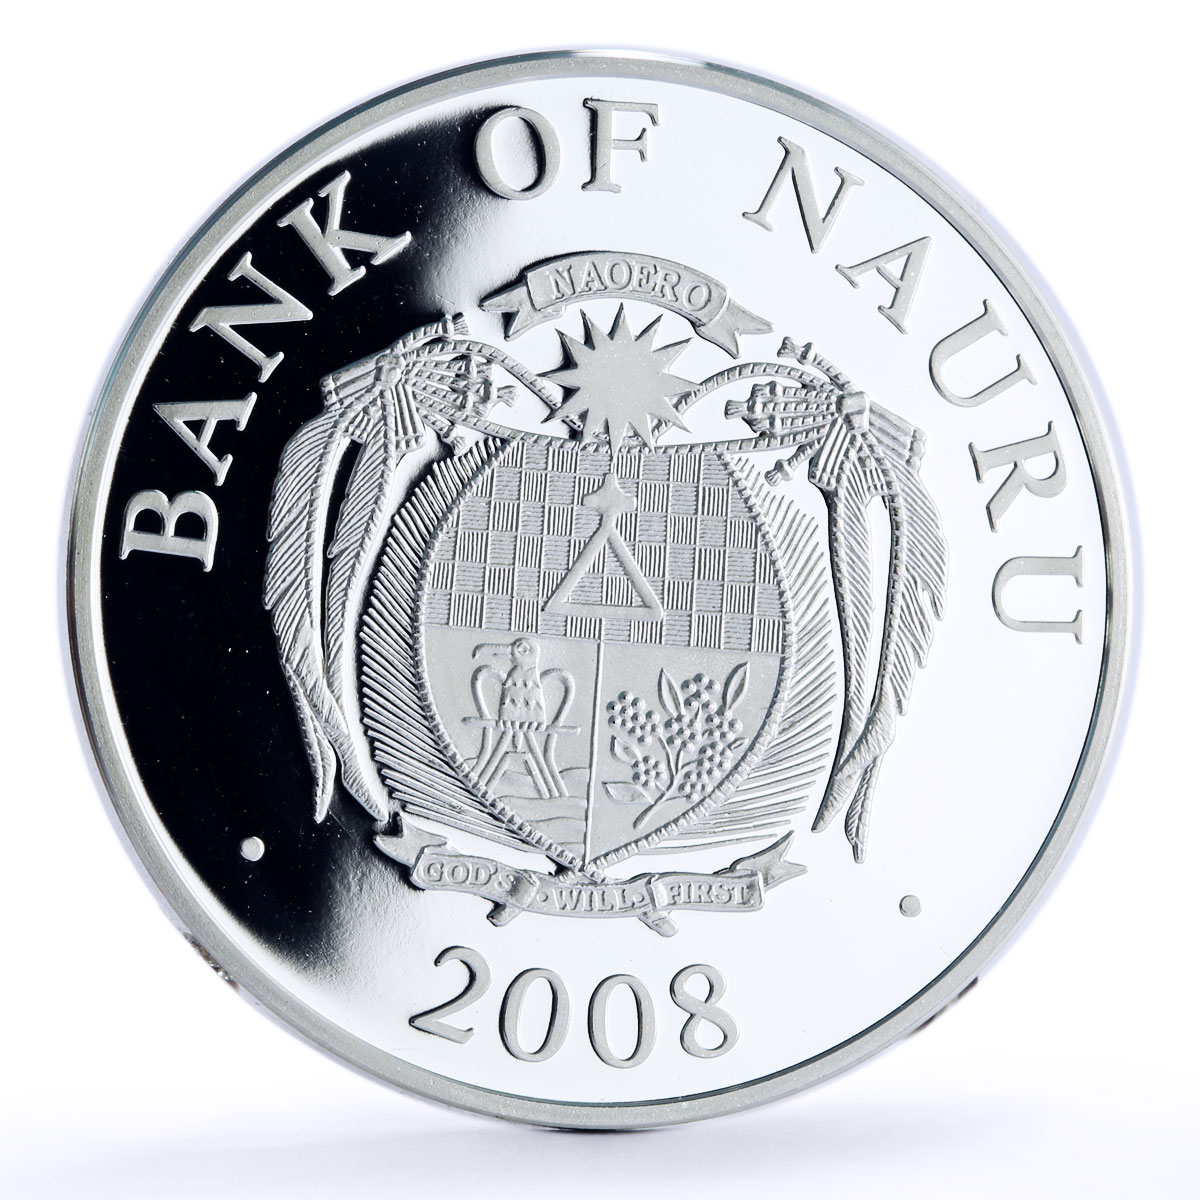 Nauru 10 dollars Seafaring Greif 1951 Ship Clipper proof silver coin 2008